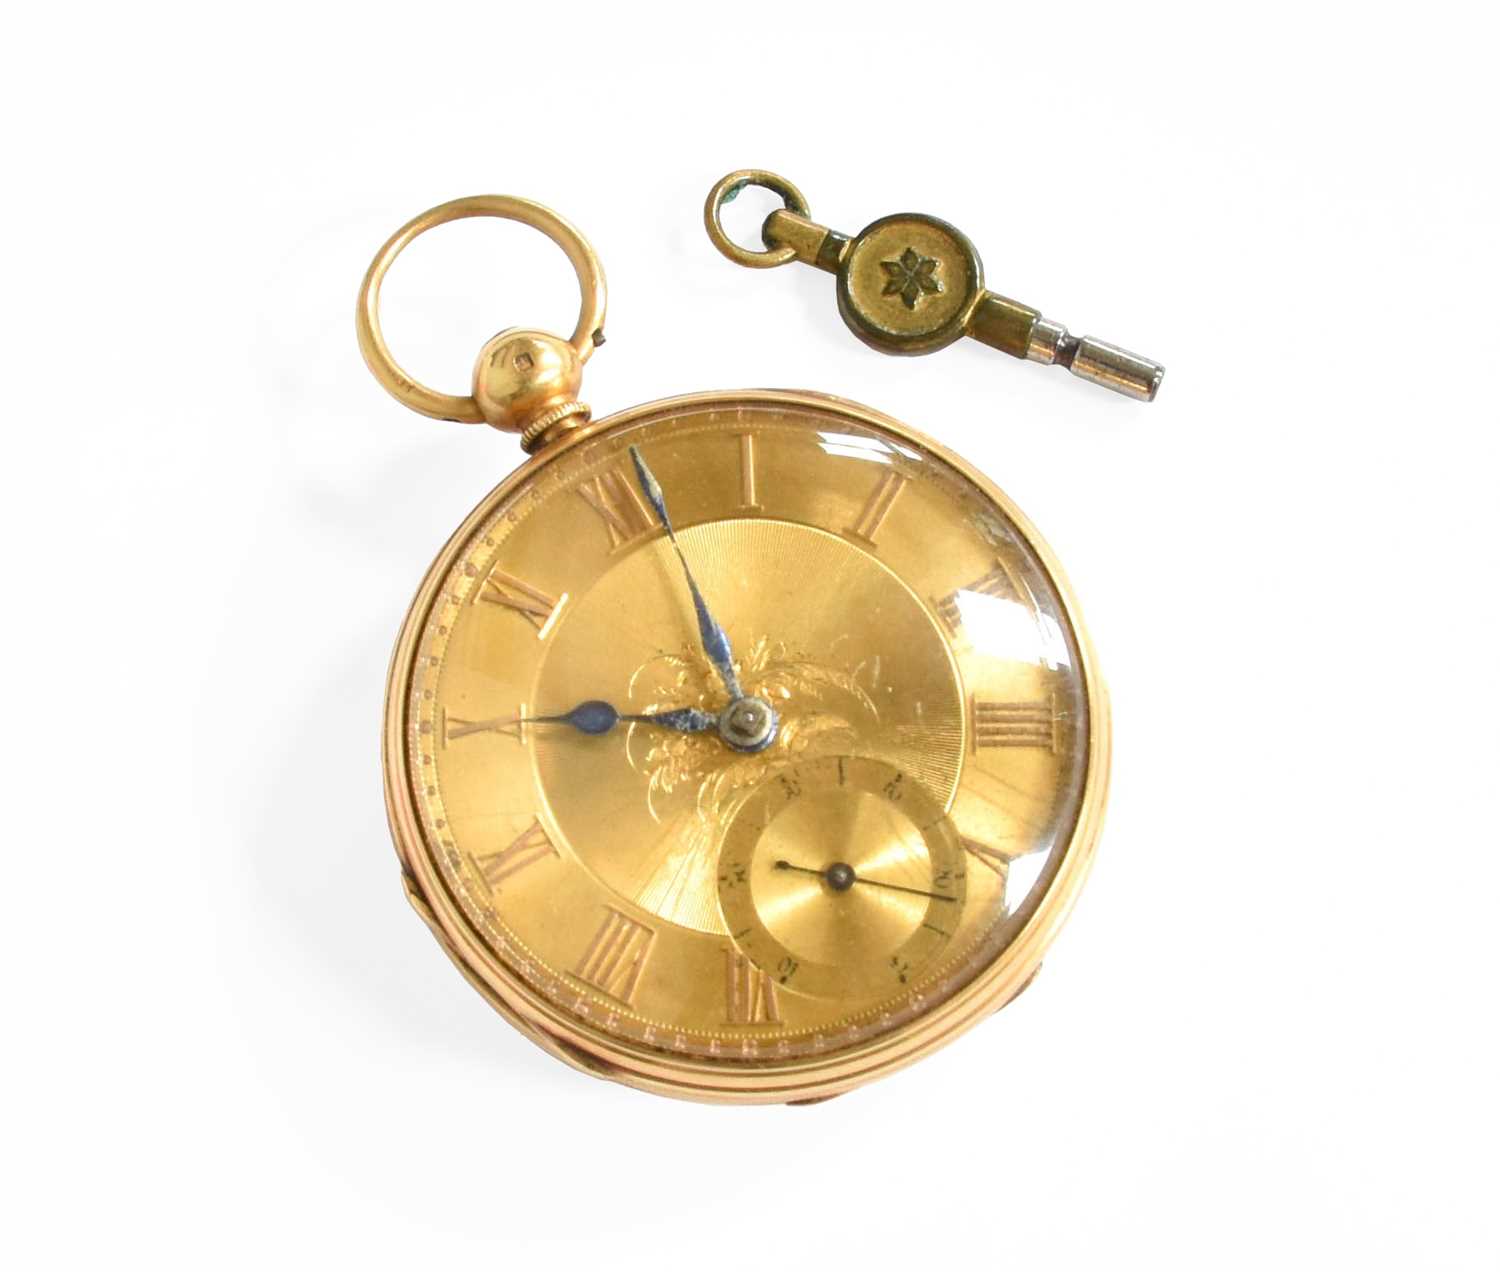 Lot 274 - An 18ct Gold Pocket watch